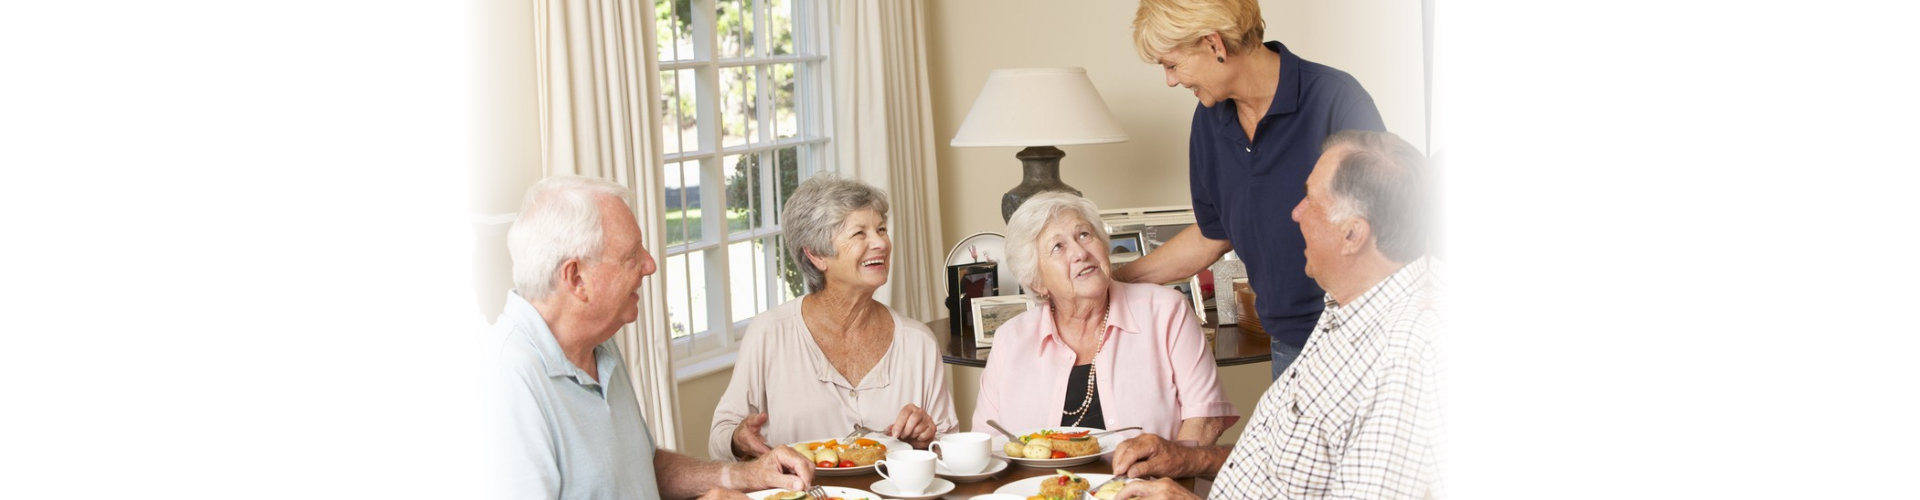 caregiver preparing food for seniors